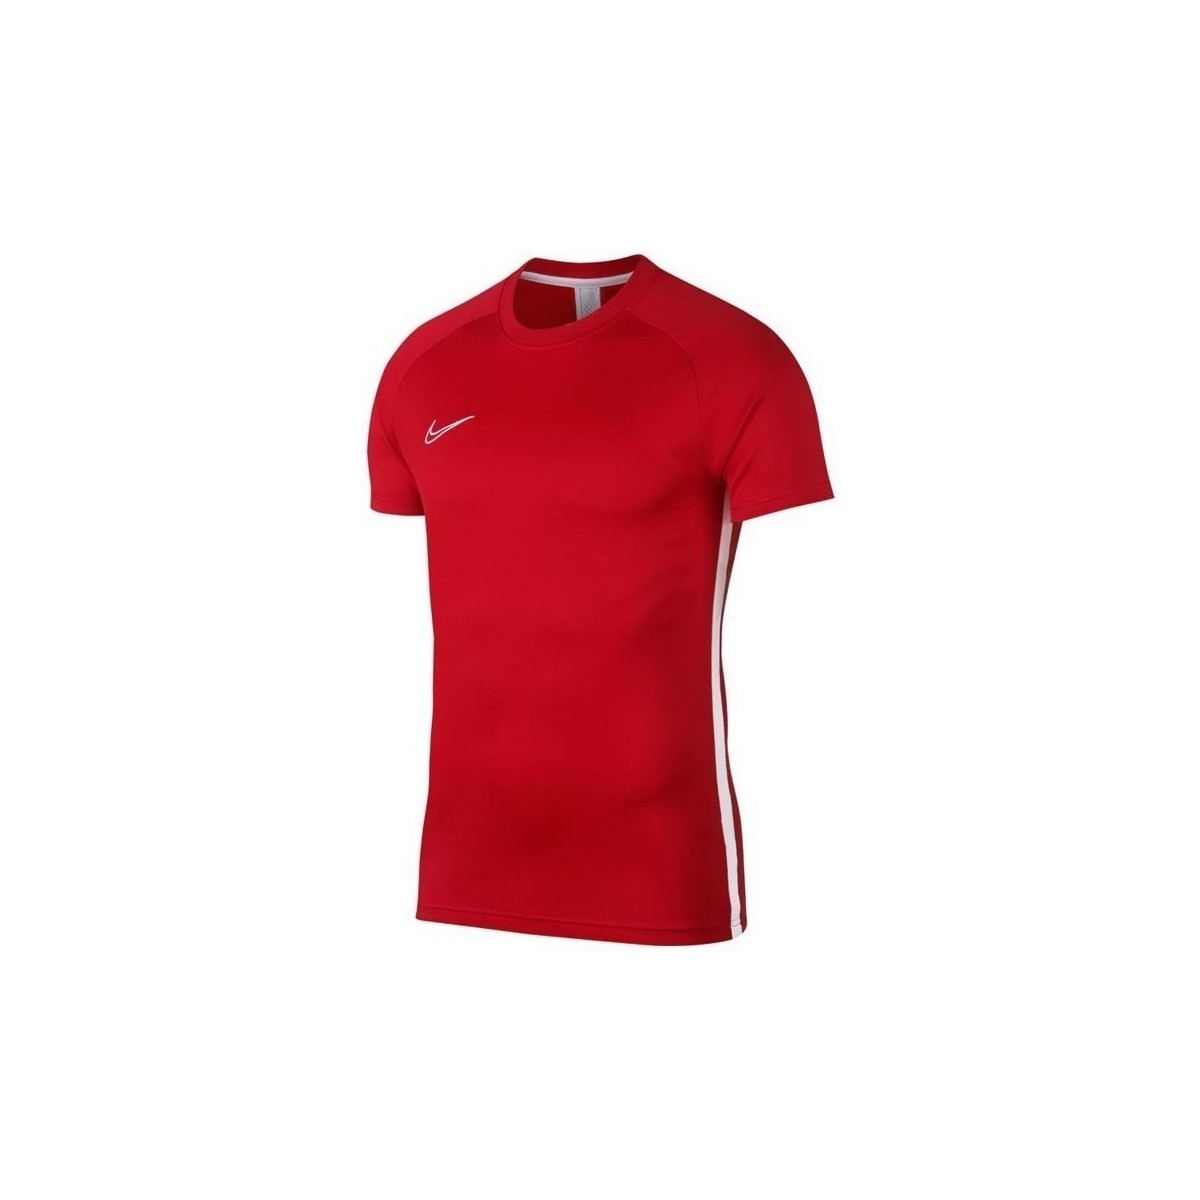 Textil Muži Trička s krátkým rukávem Nike Dry Academy Top Červená